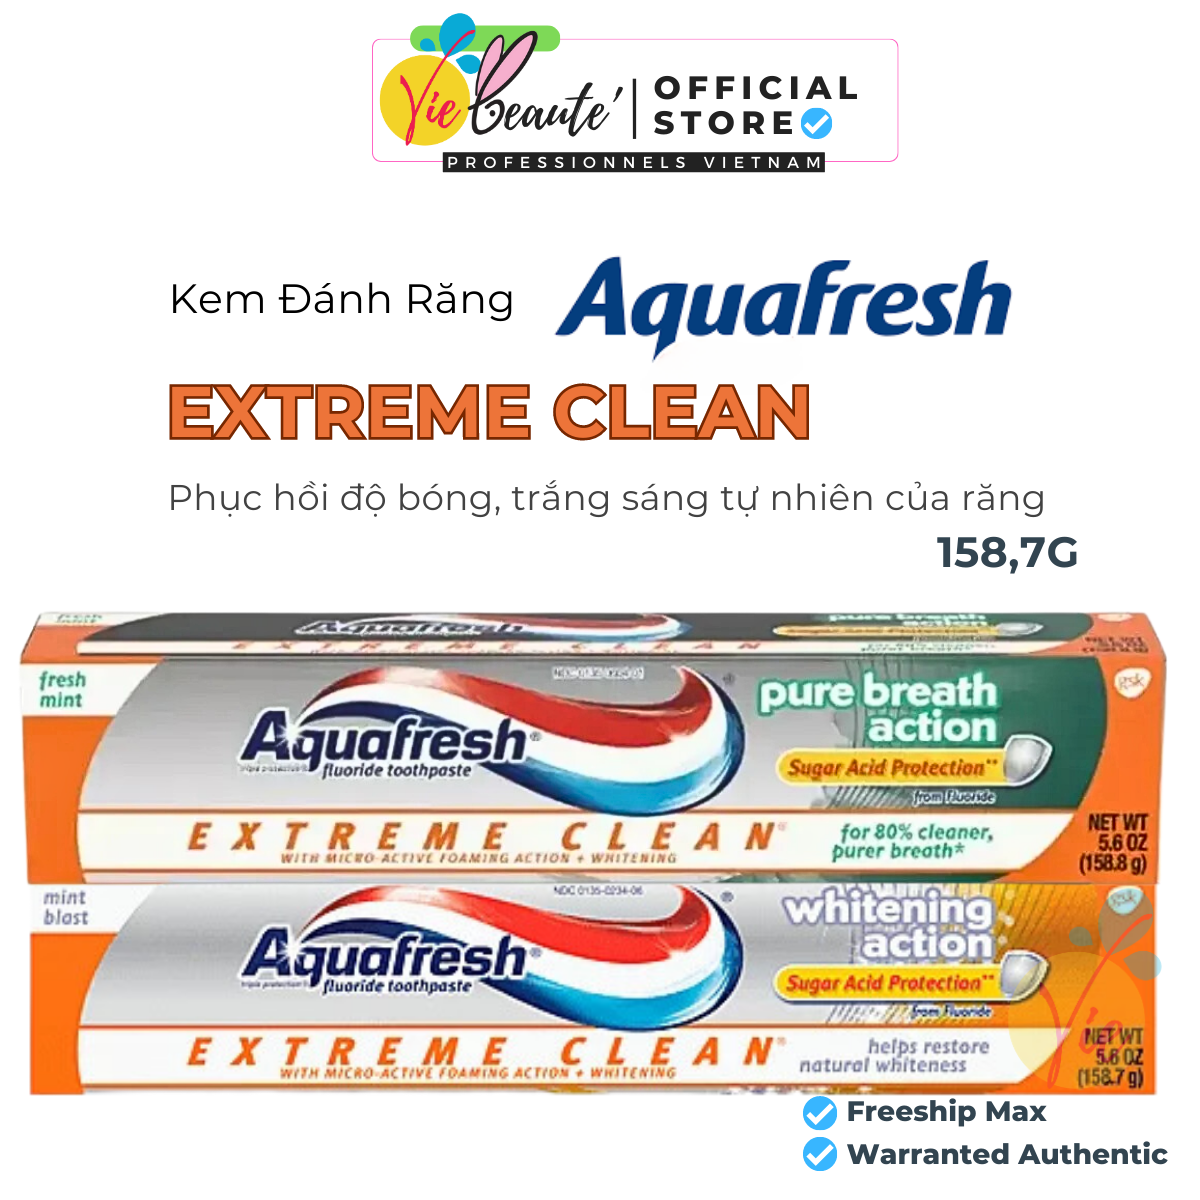 Aquafresh Extreme Clean toothpaste